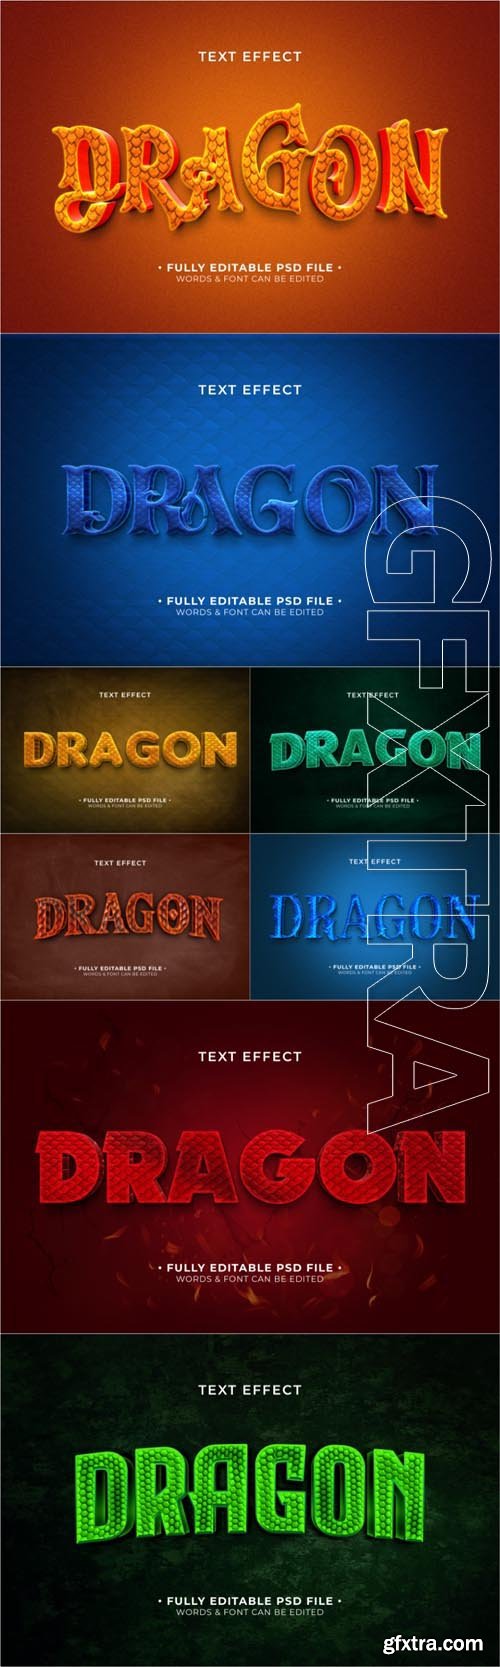 Psd dragon text effect